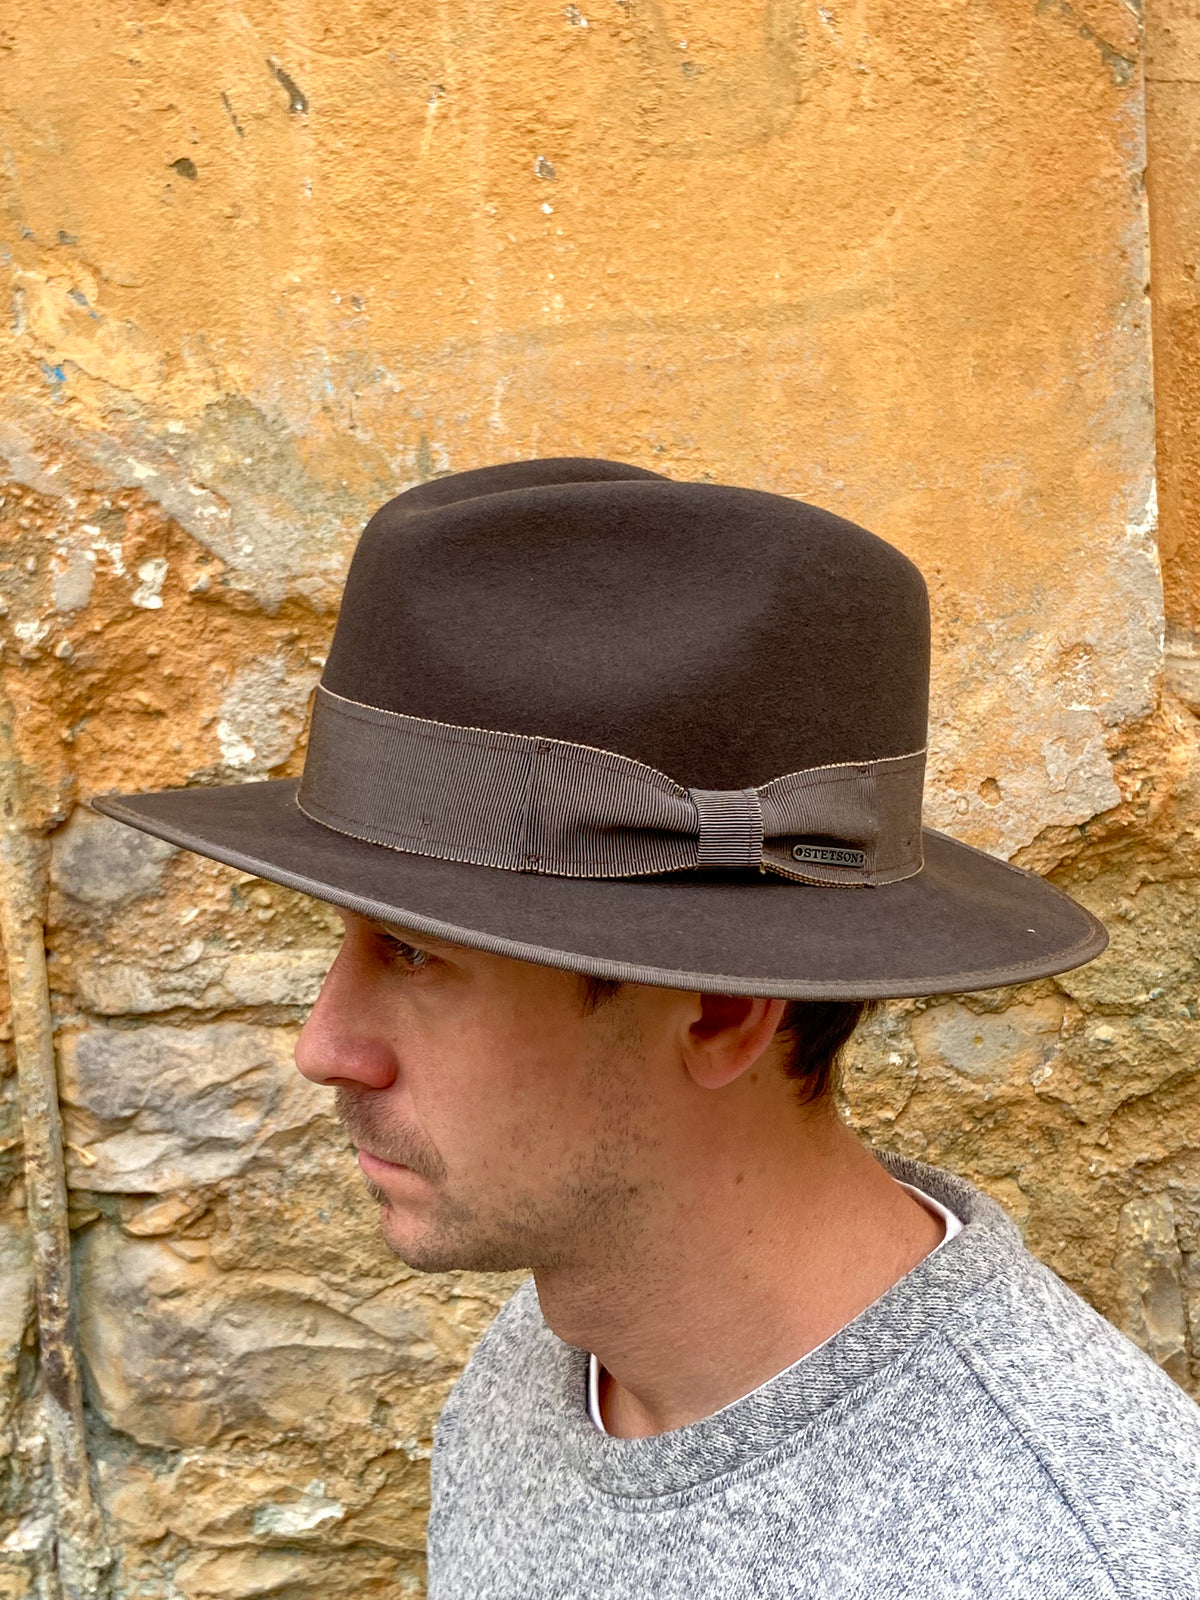 Stetson Traveller Wool Cashmere Hat (2598117)